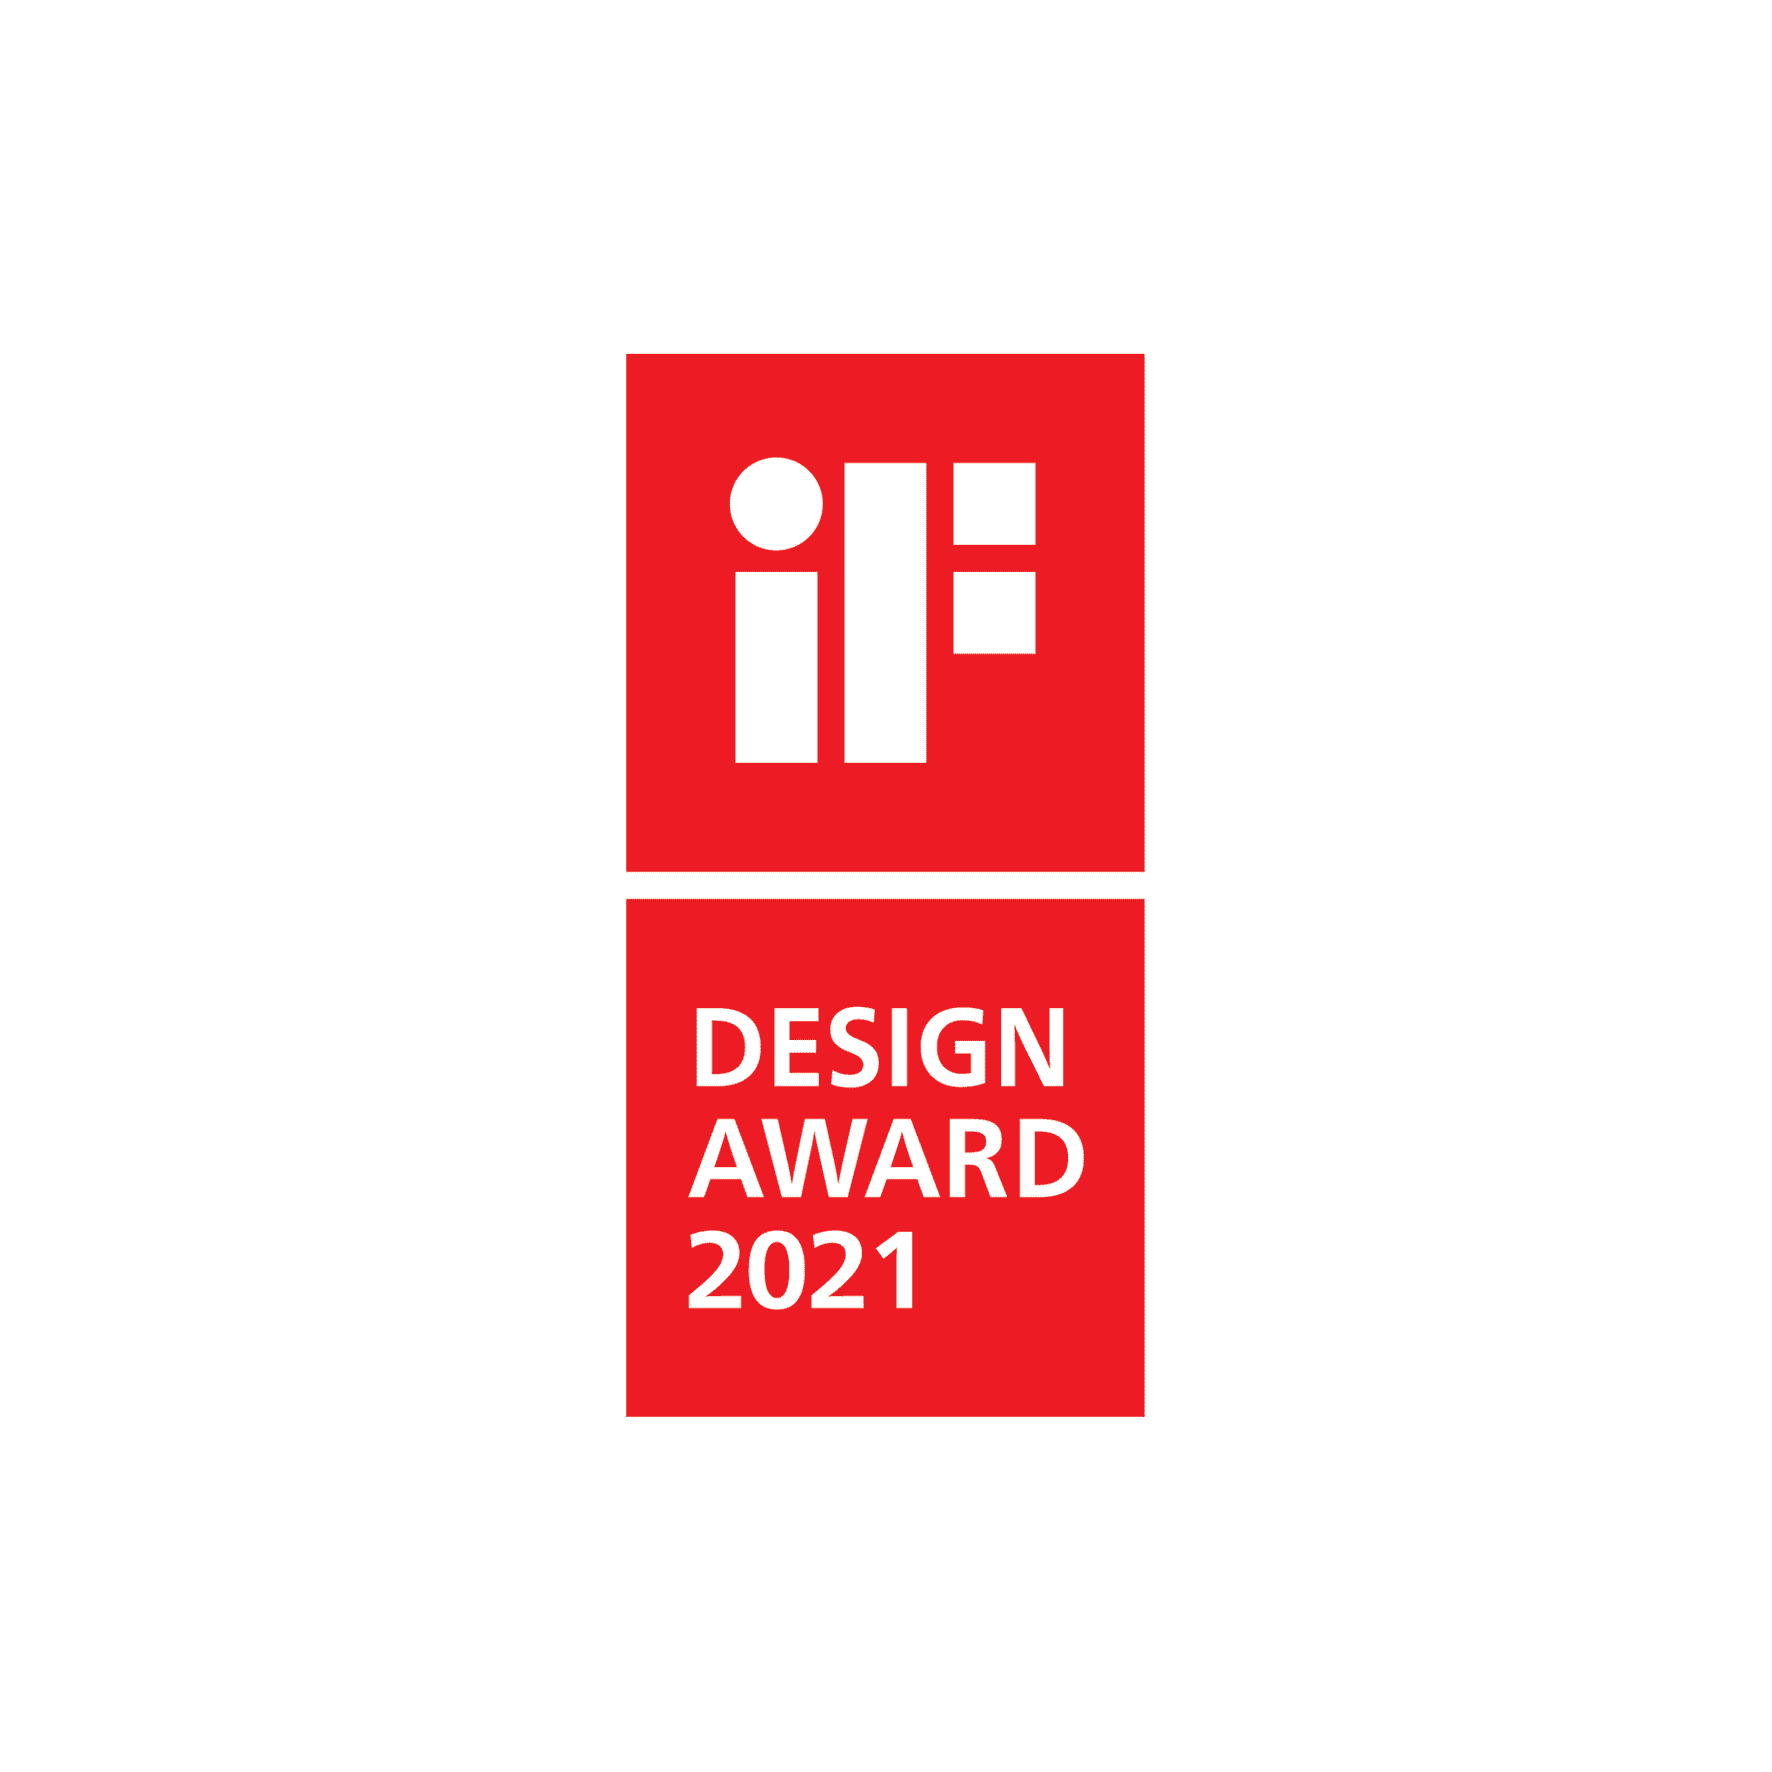 IF Design award